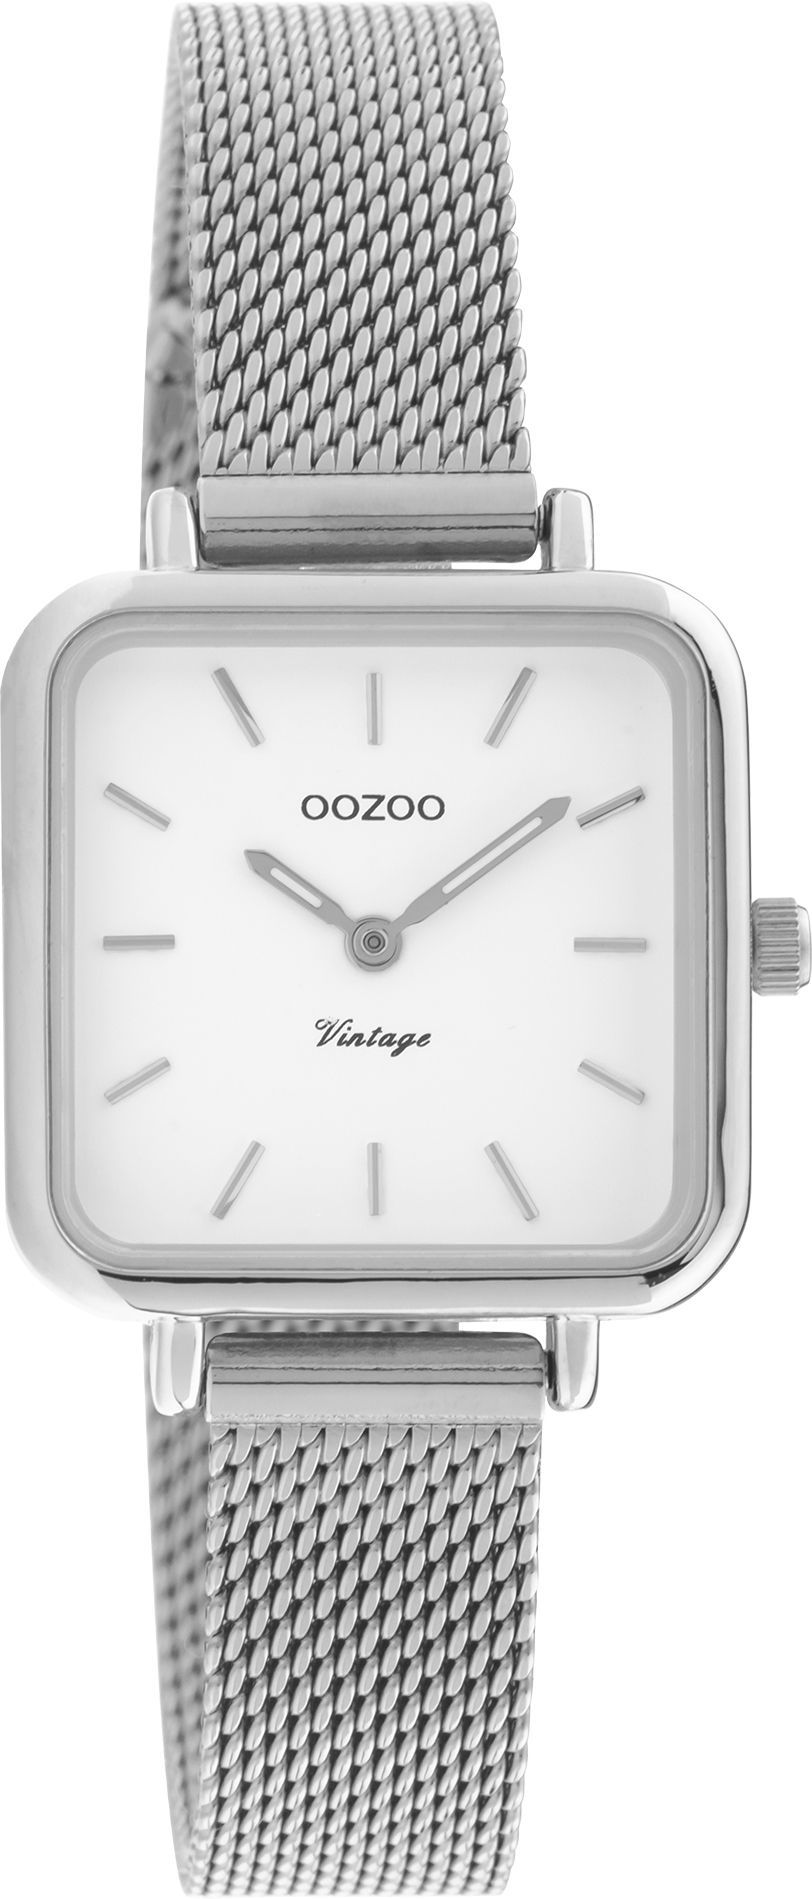 OOZOO Vintage C20261 in colore argento